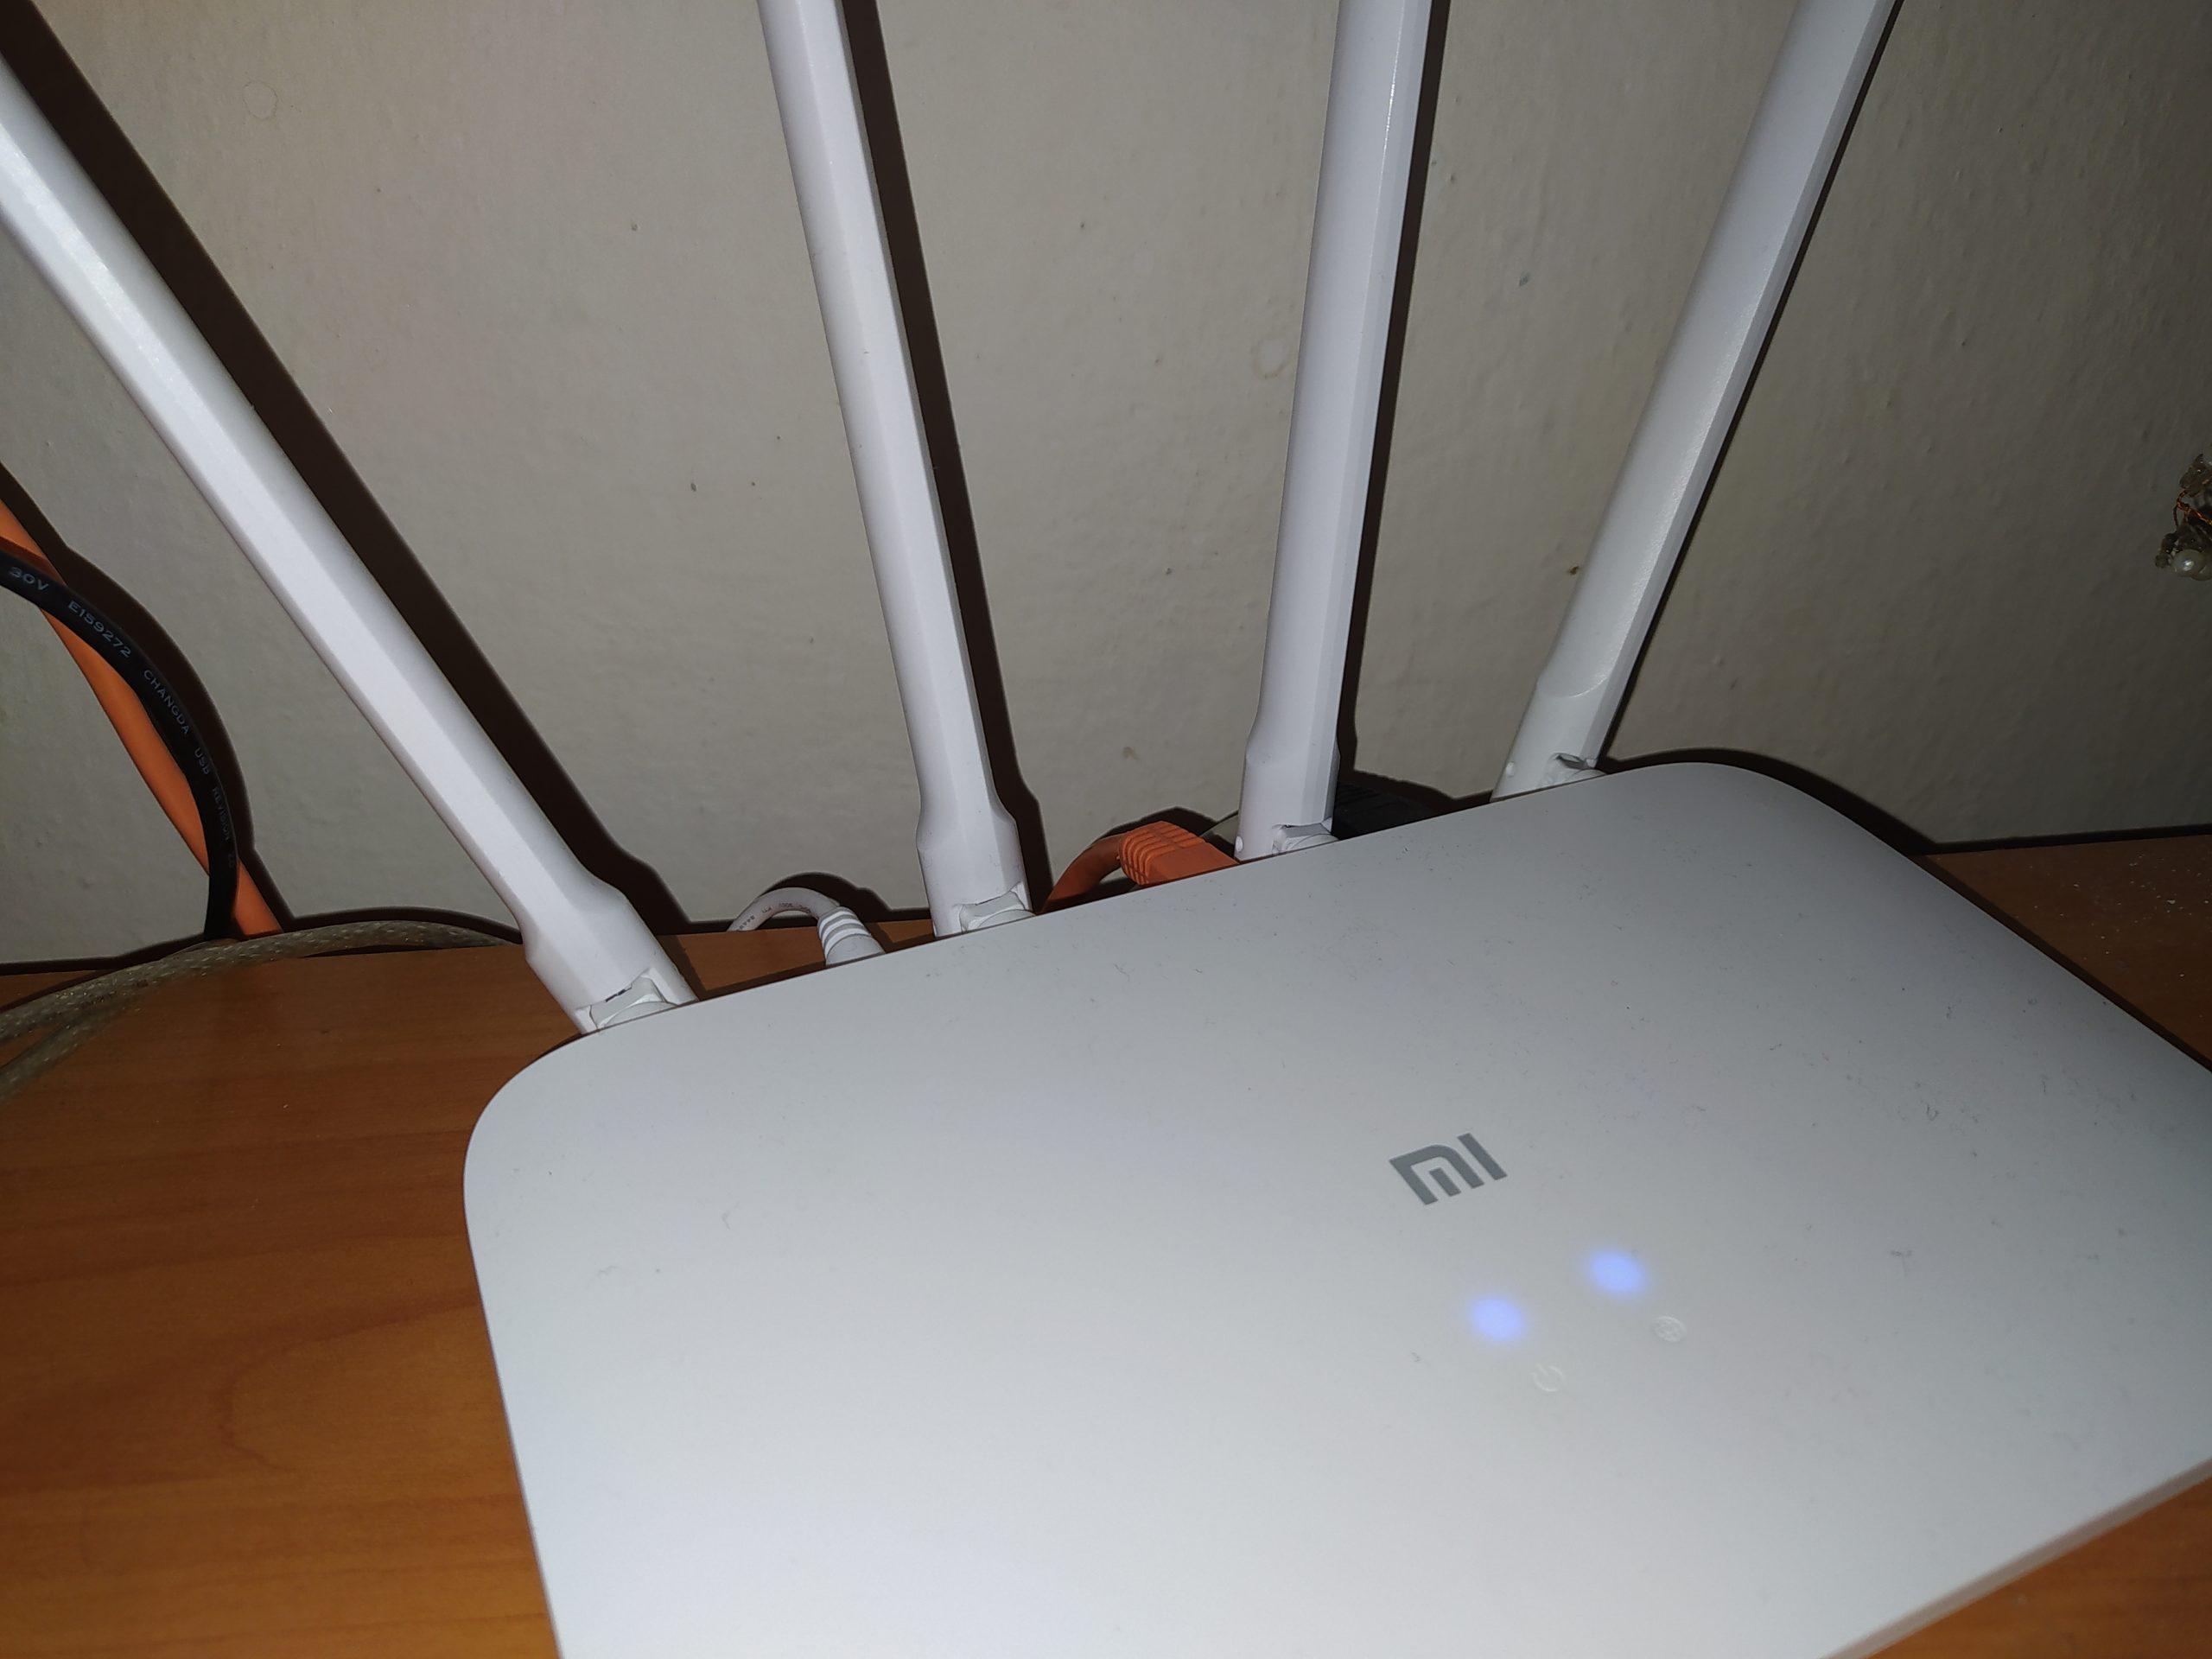 Mi wifi router 4a gigabit. Роутер mi WIFI Router 4a. Xiaomi mi Router 4a Giga. Xiaomi mi WIFI Router 4a. Xiaomi mi Router 4.